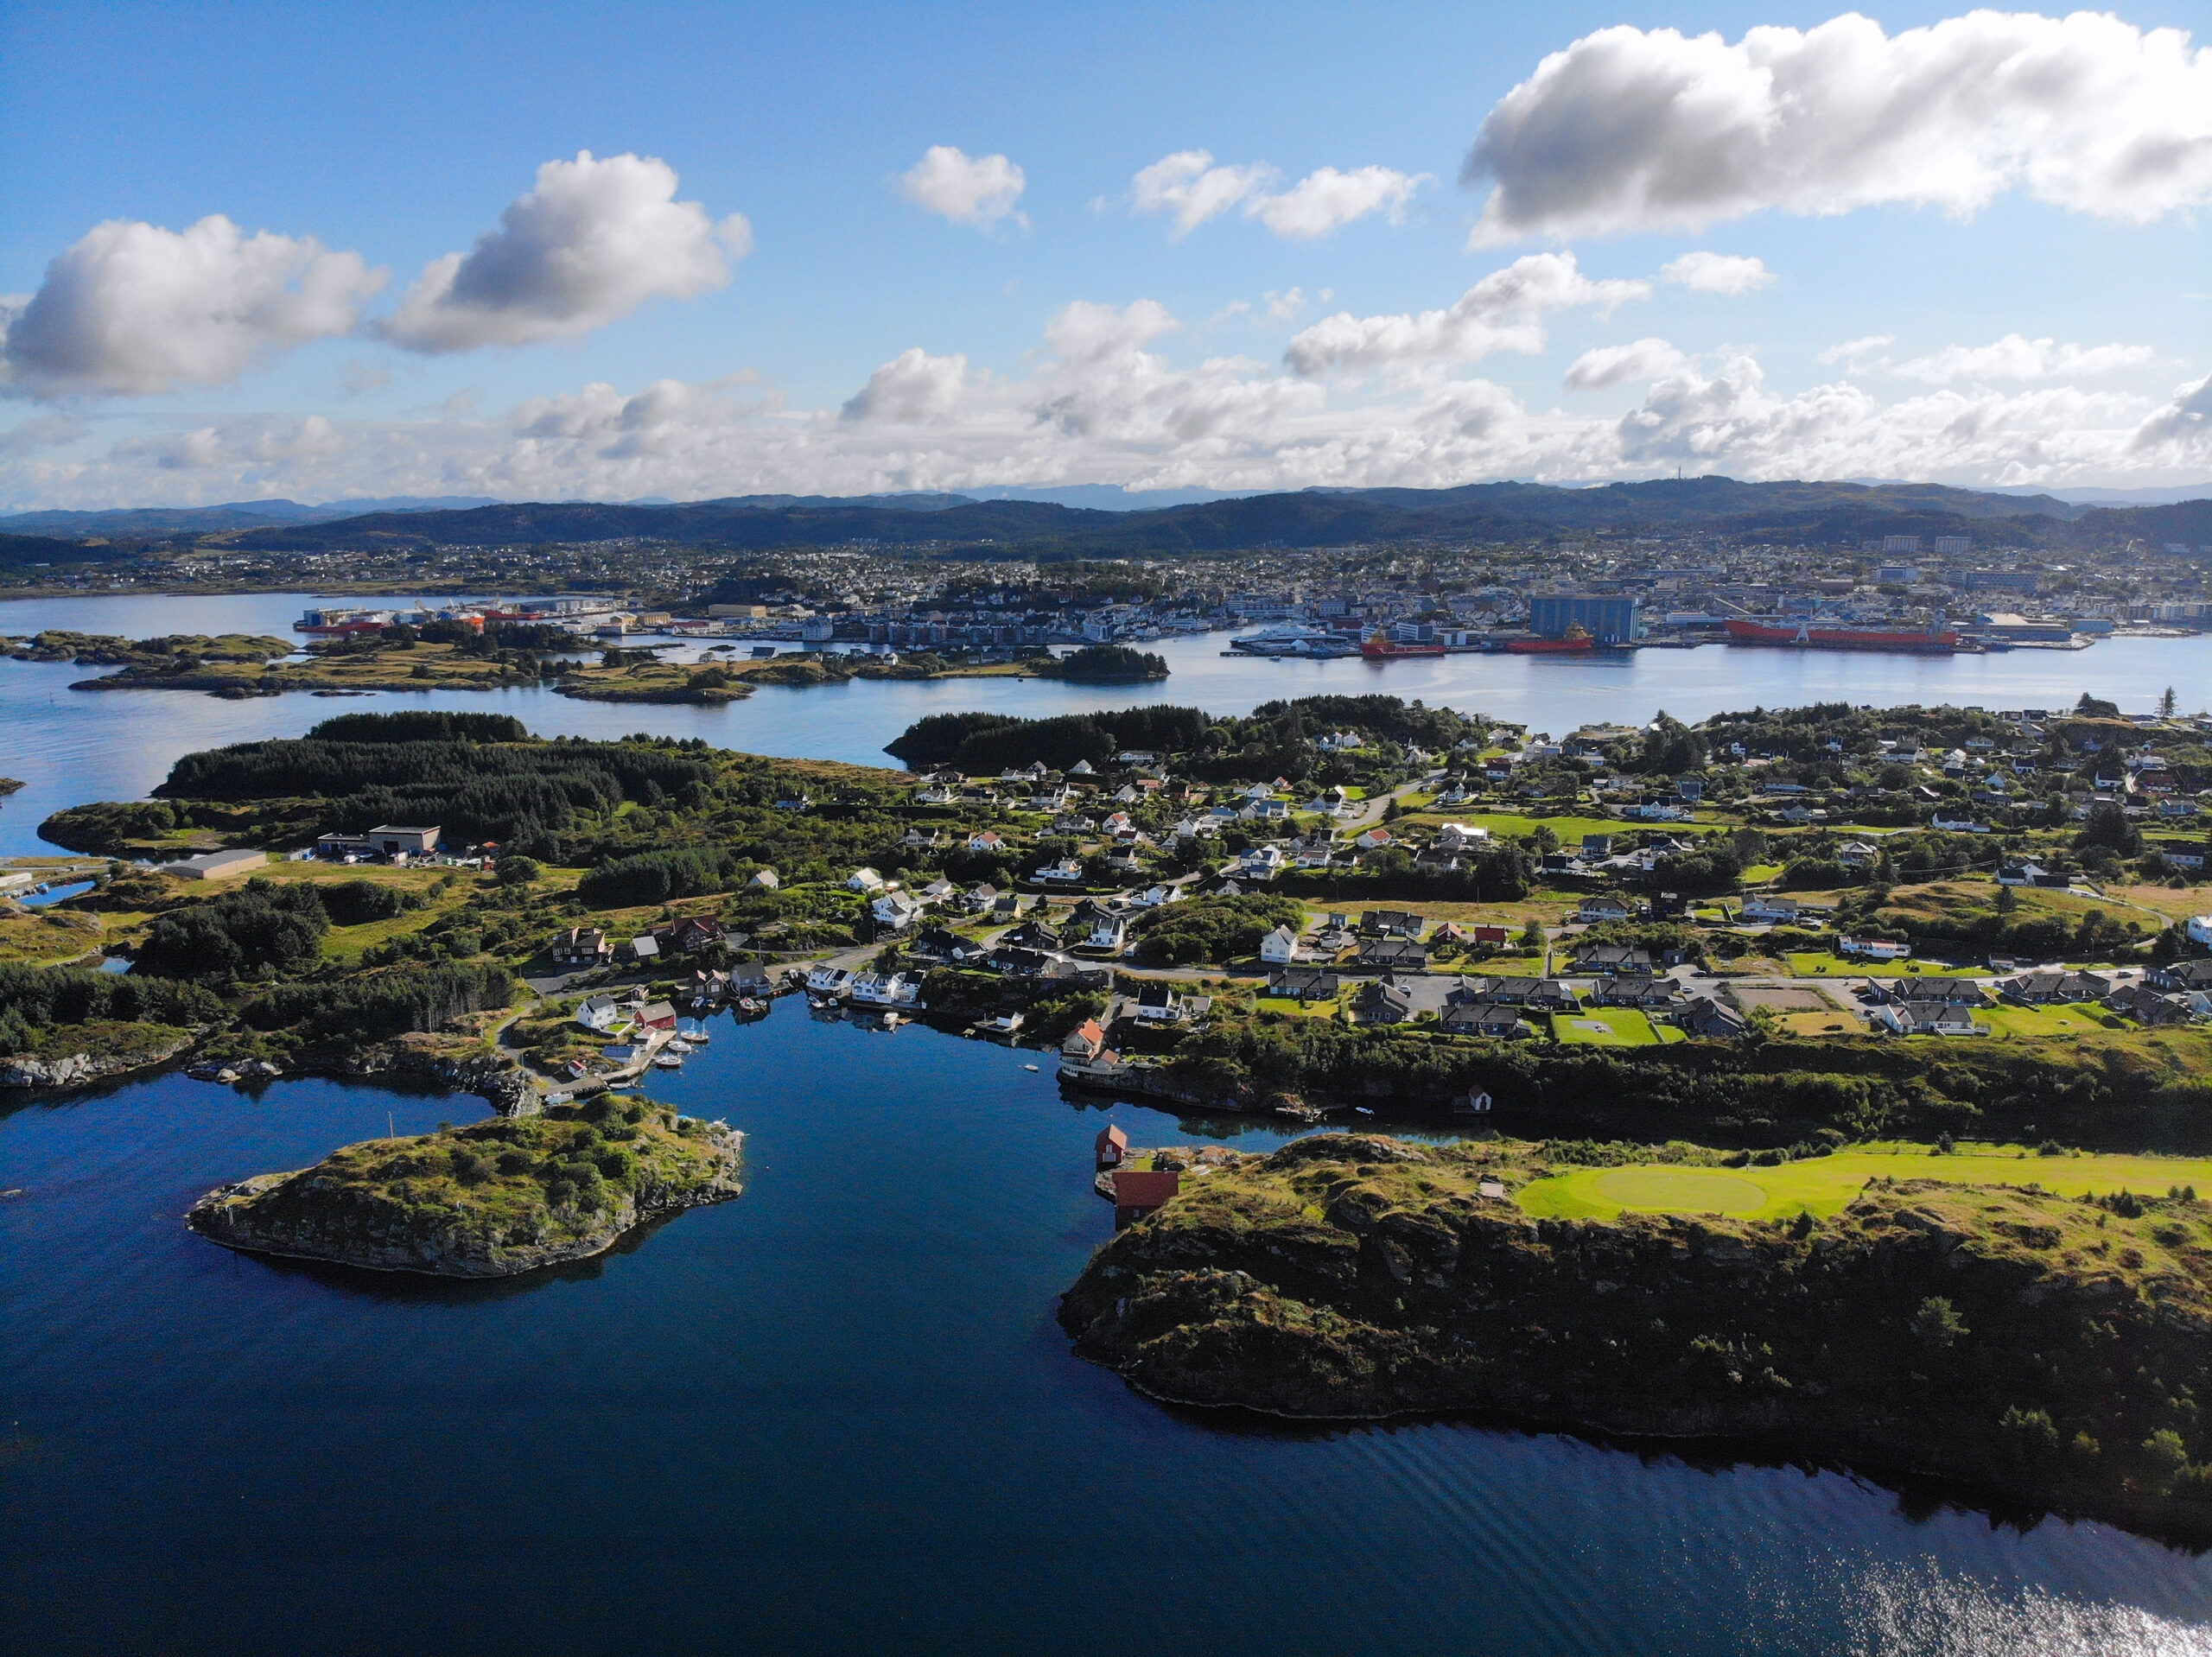 Norge droneutsikt, kyst og øyer nær Haugesund by. Foto.